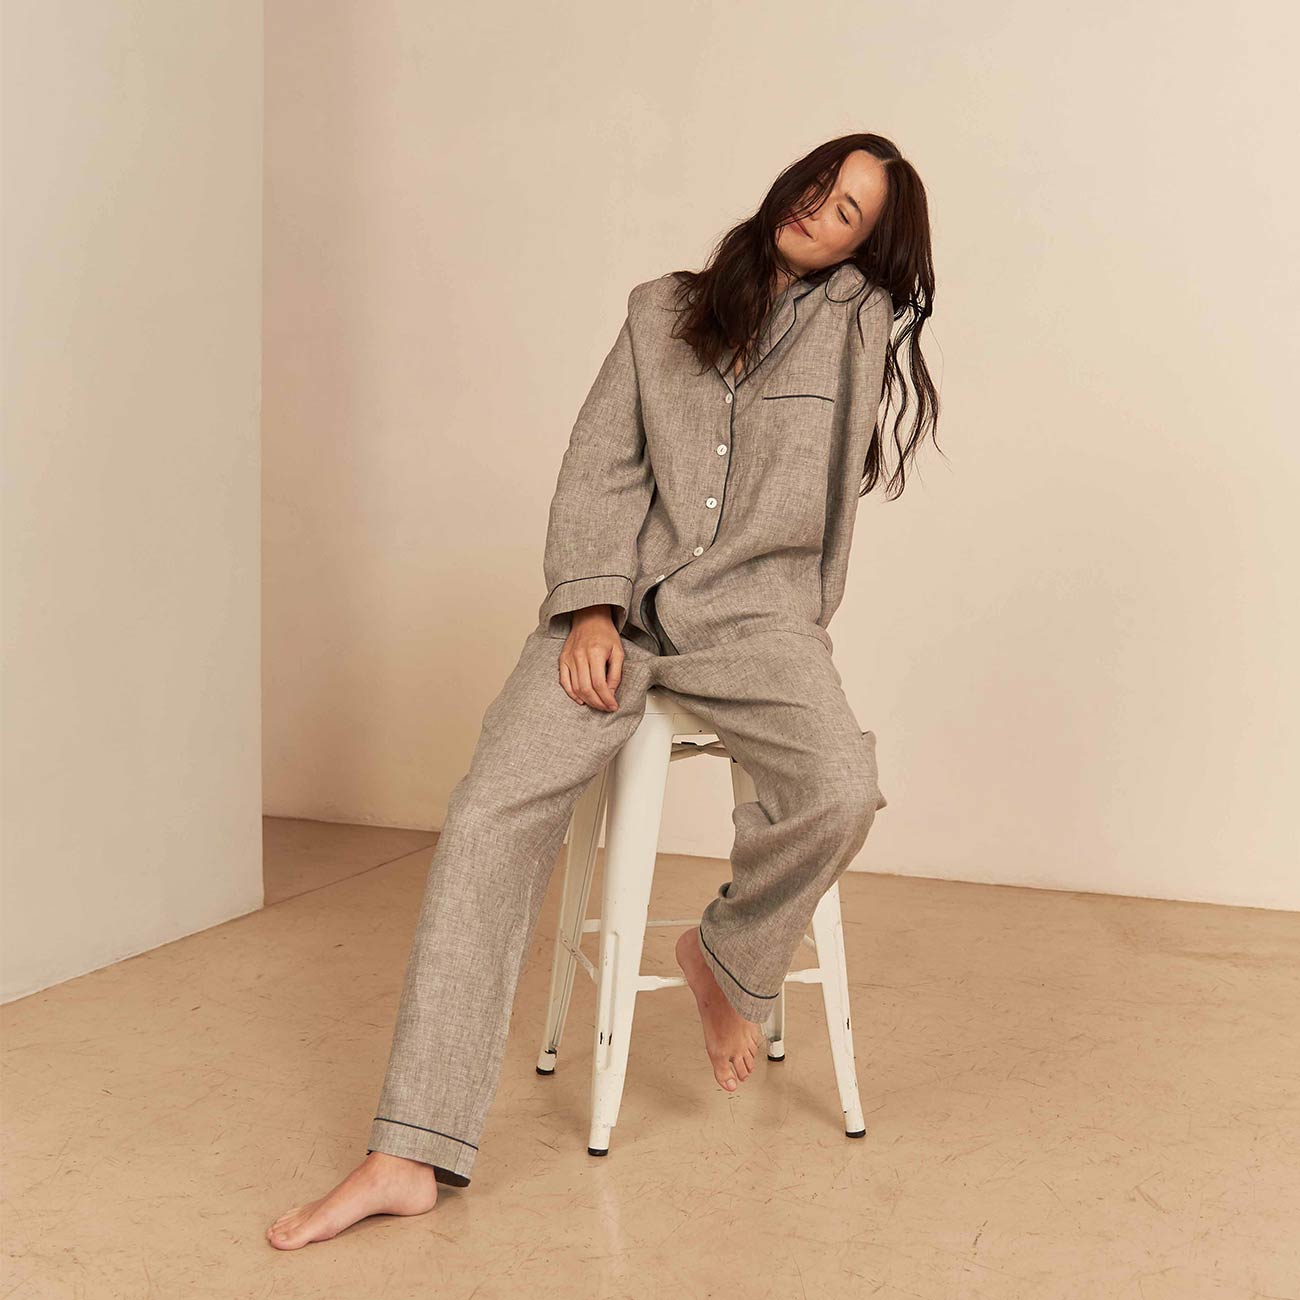 Women's Gray Linen Pajama Pants